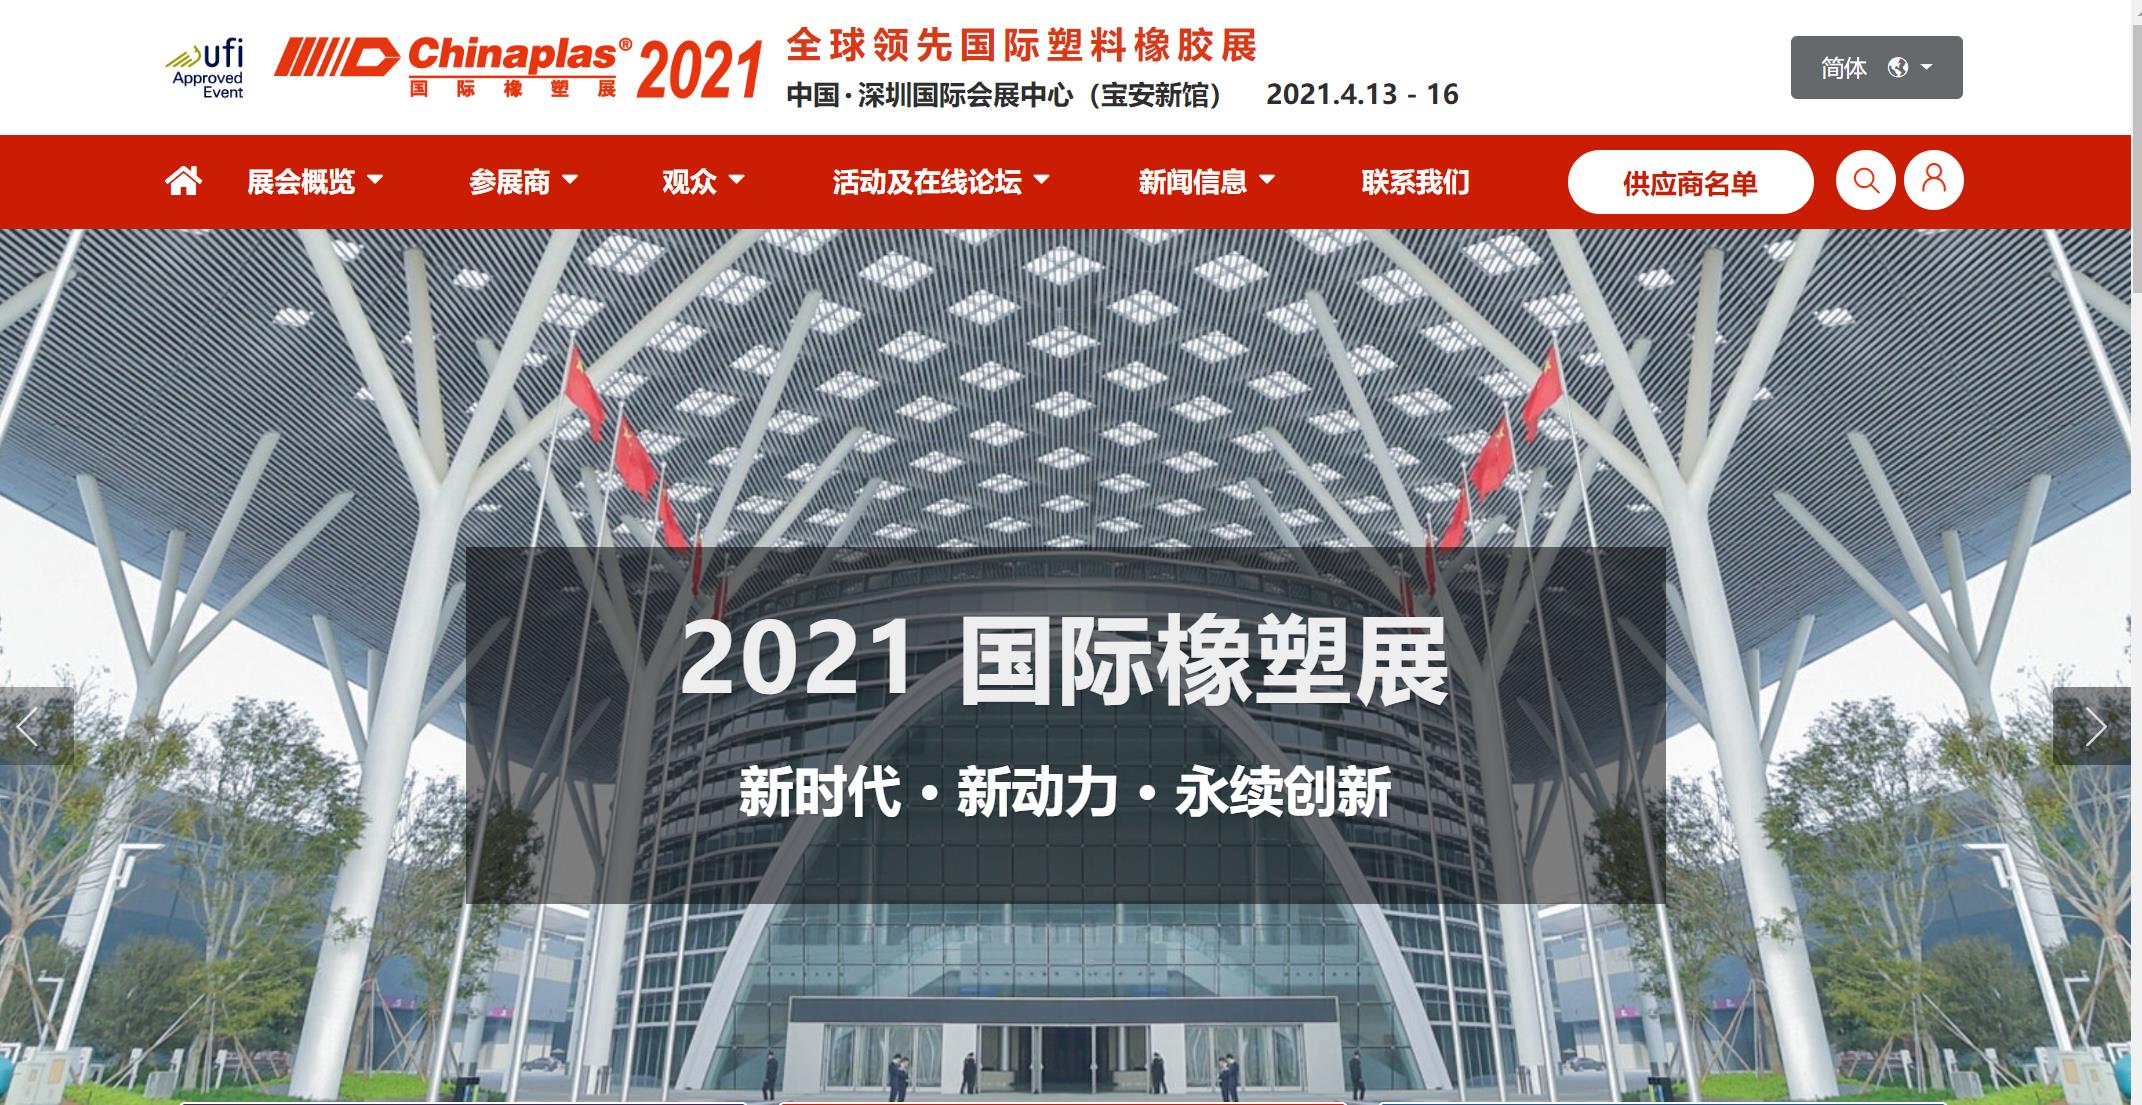 CHINAPLAS 2021国际橡塑展 深圳国际会展中心•展厅17•展位R21